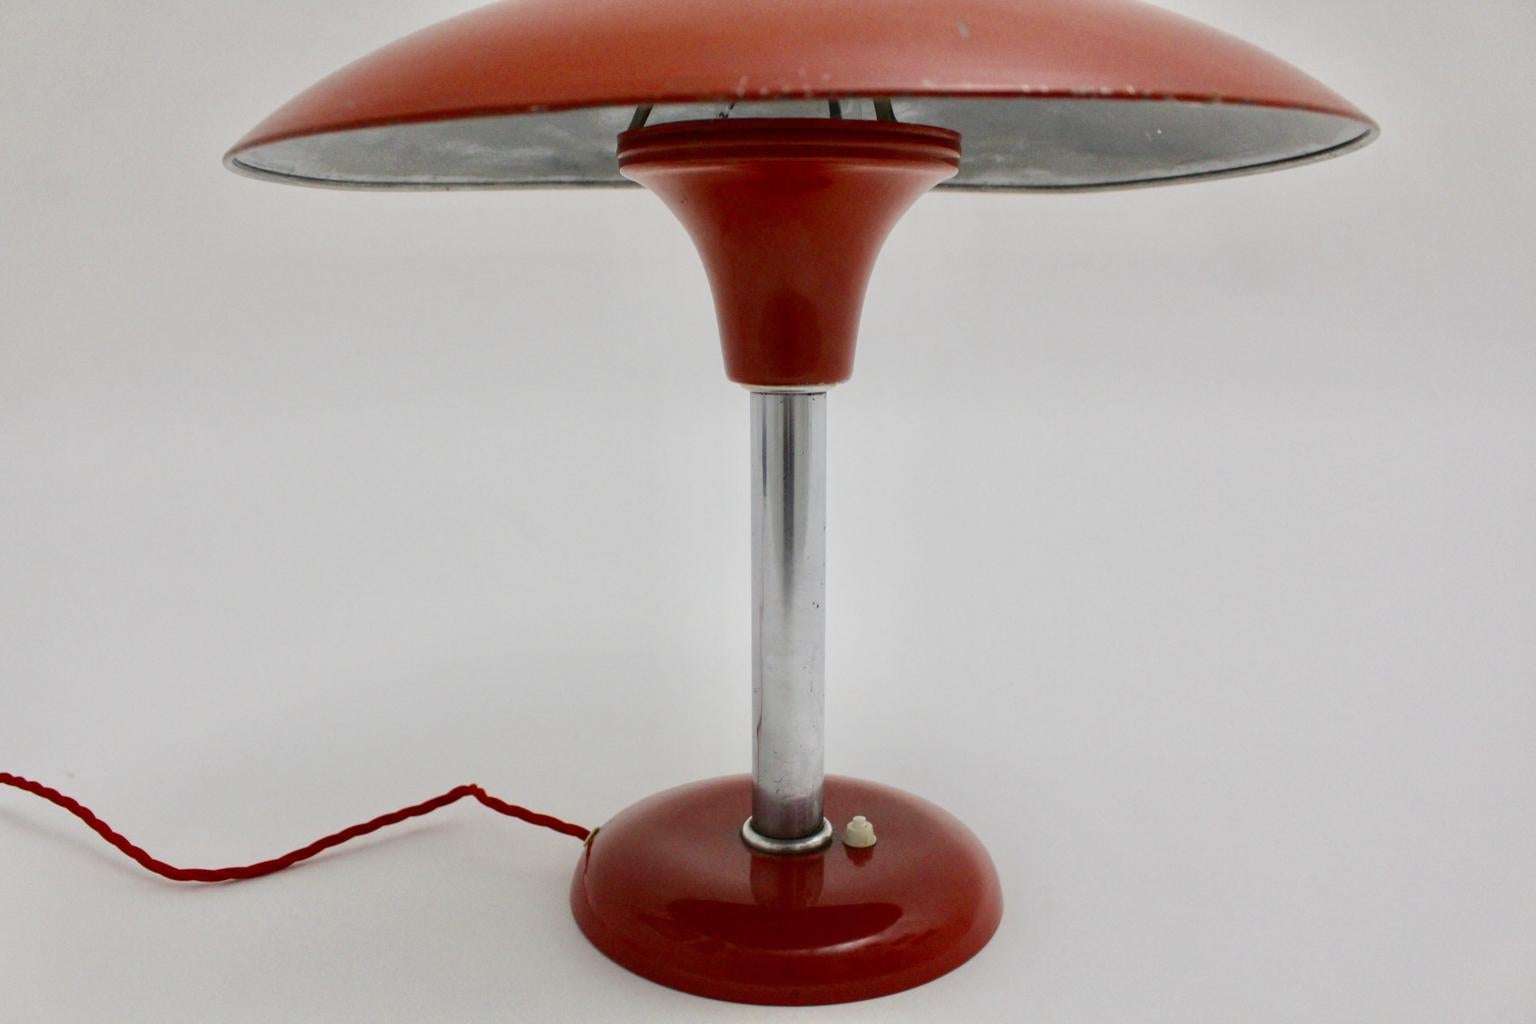 Lacquered Red Art Deco Bauhaus Era Vintage Metal Desk Lamp by Max Schumacher 1934 Germany